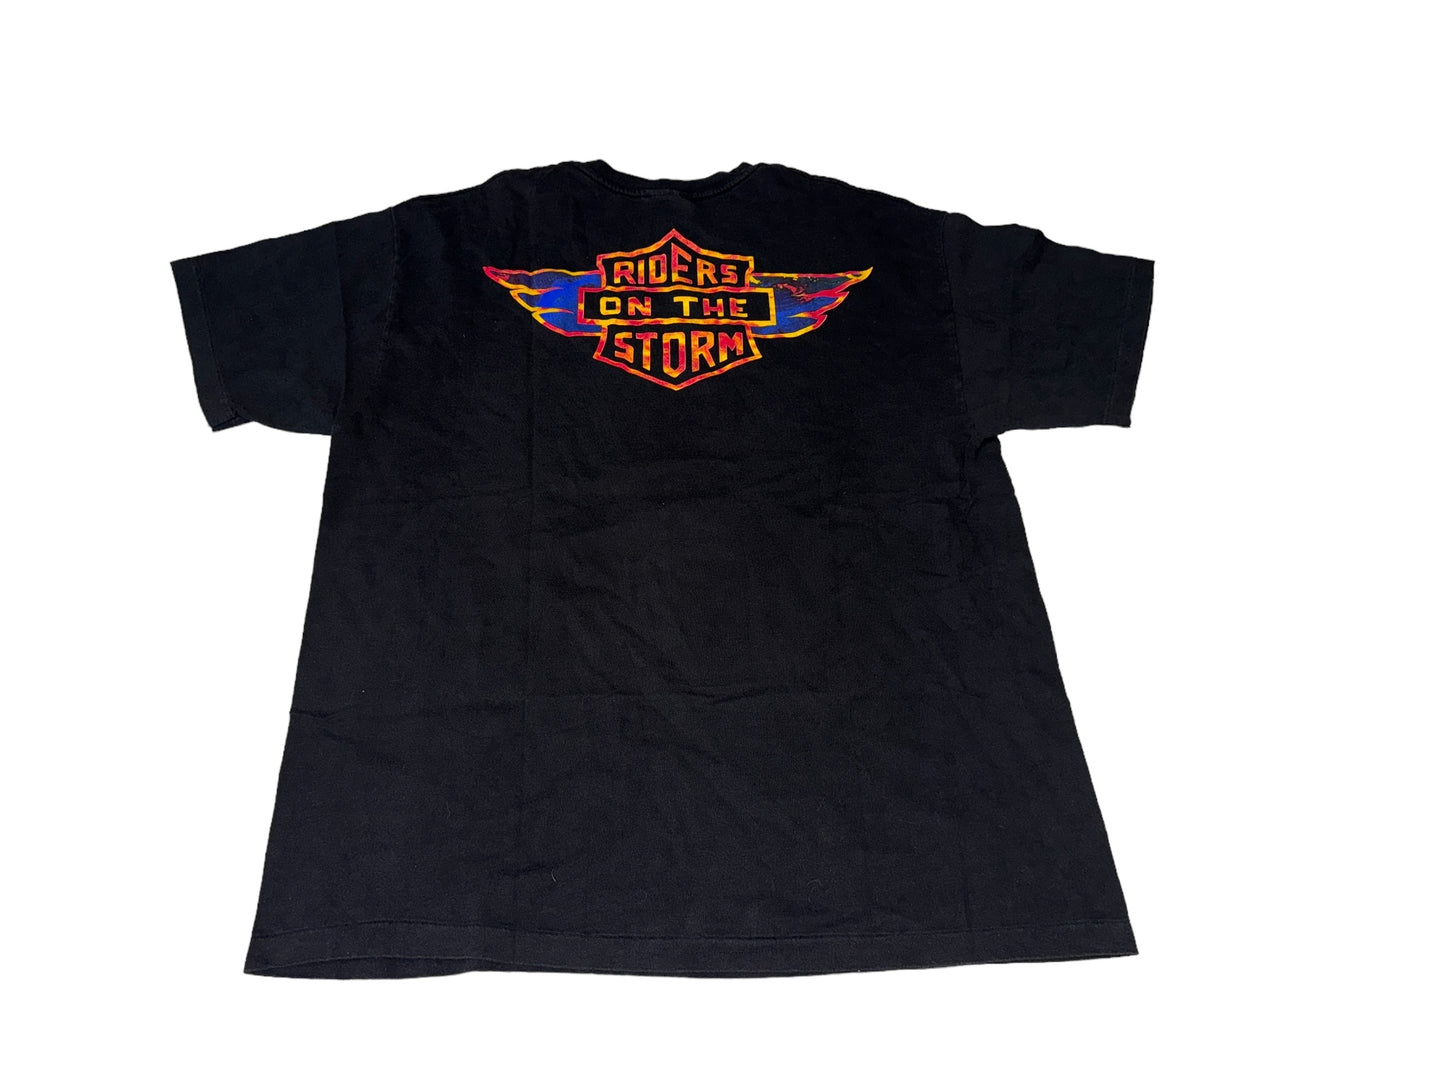 Vintage 90's The Doors T-Shirt